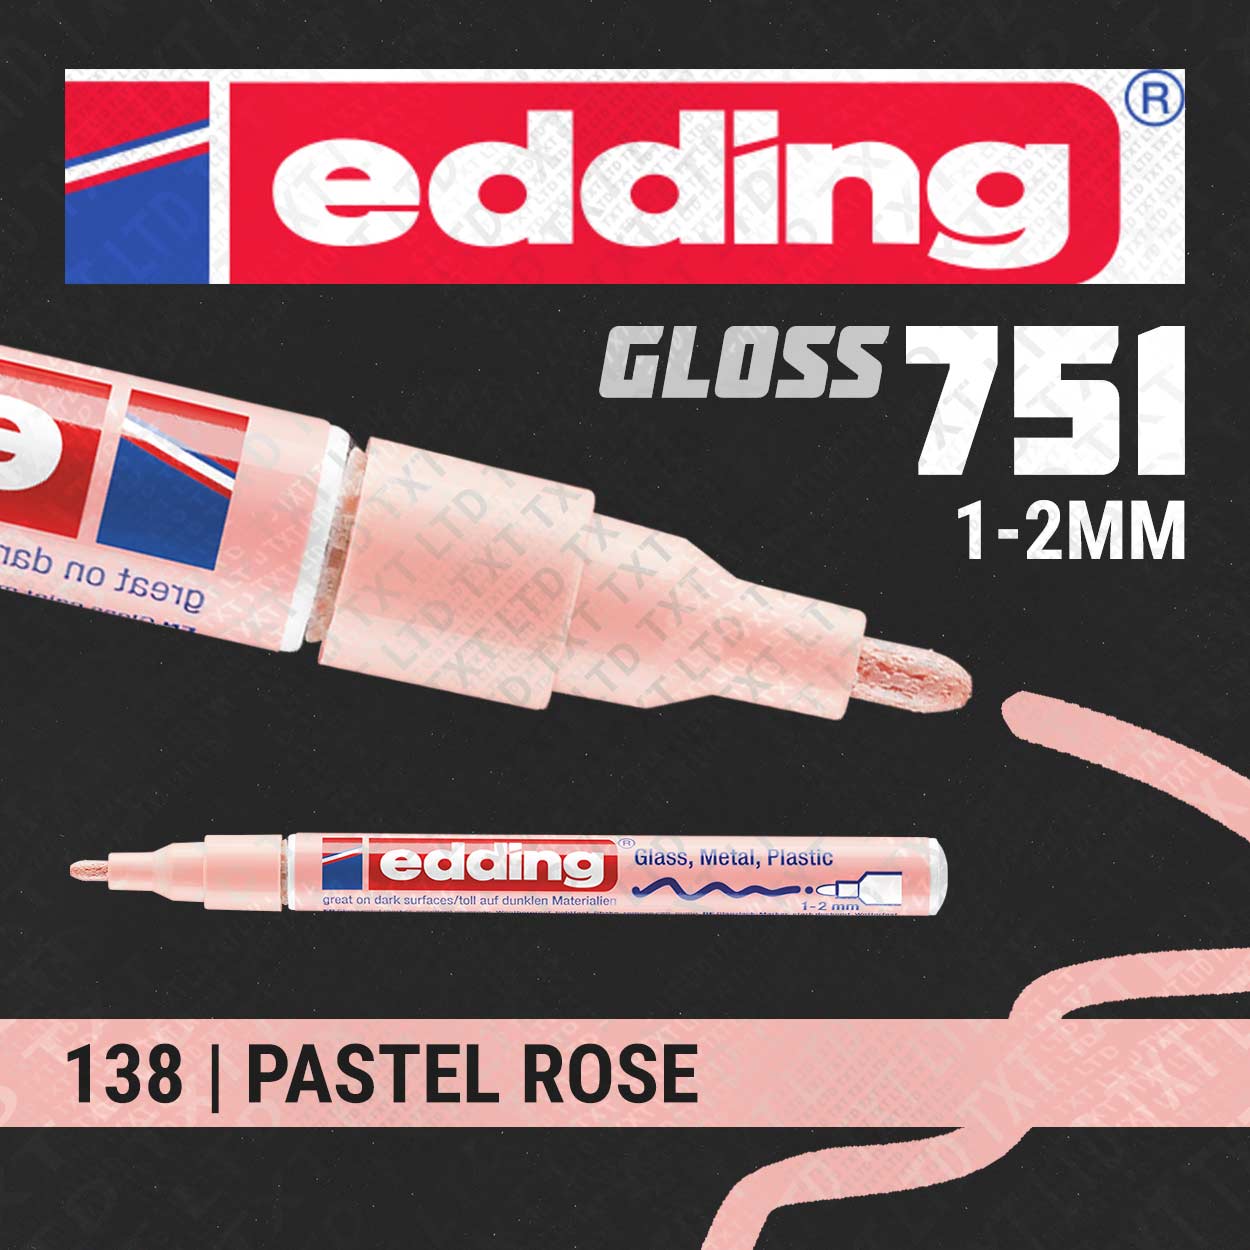 edding 751 Gloss Paint Marker 1-2mm